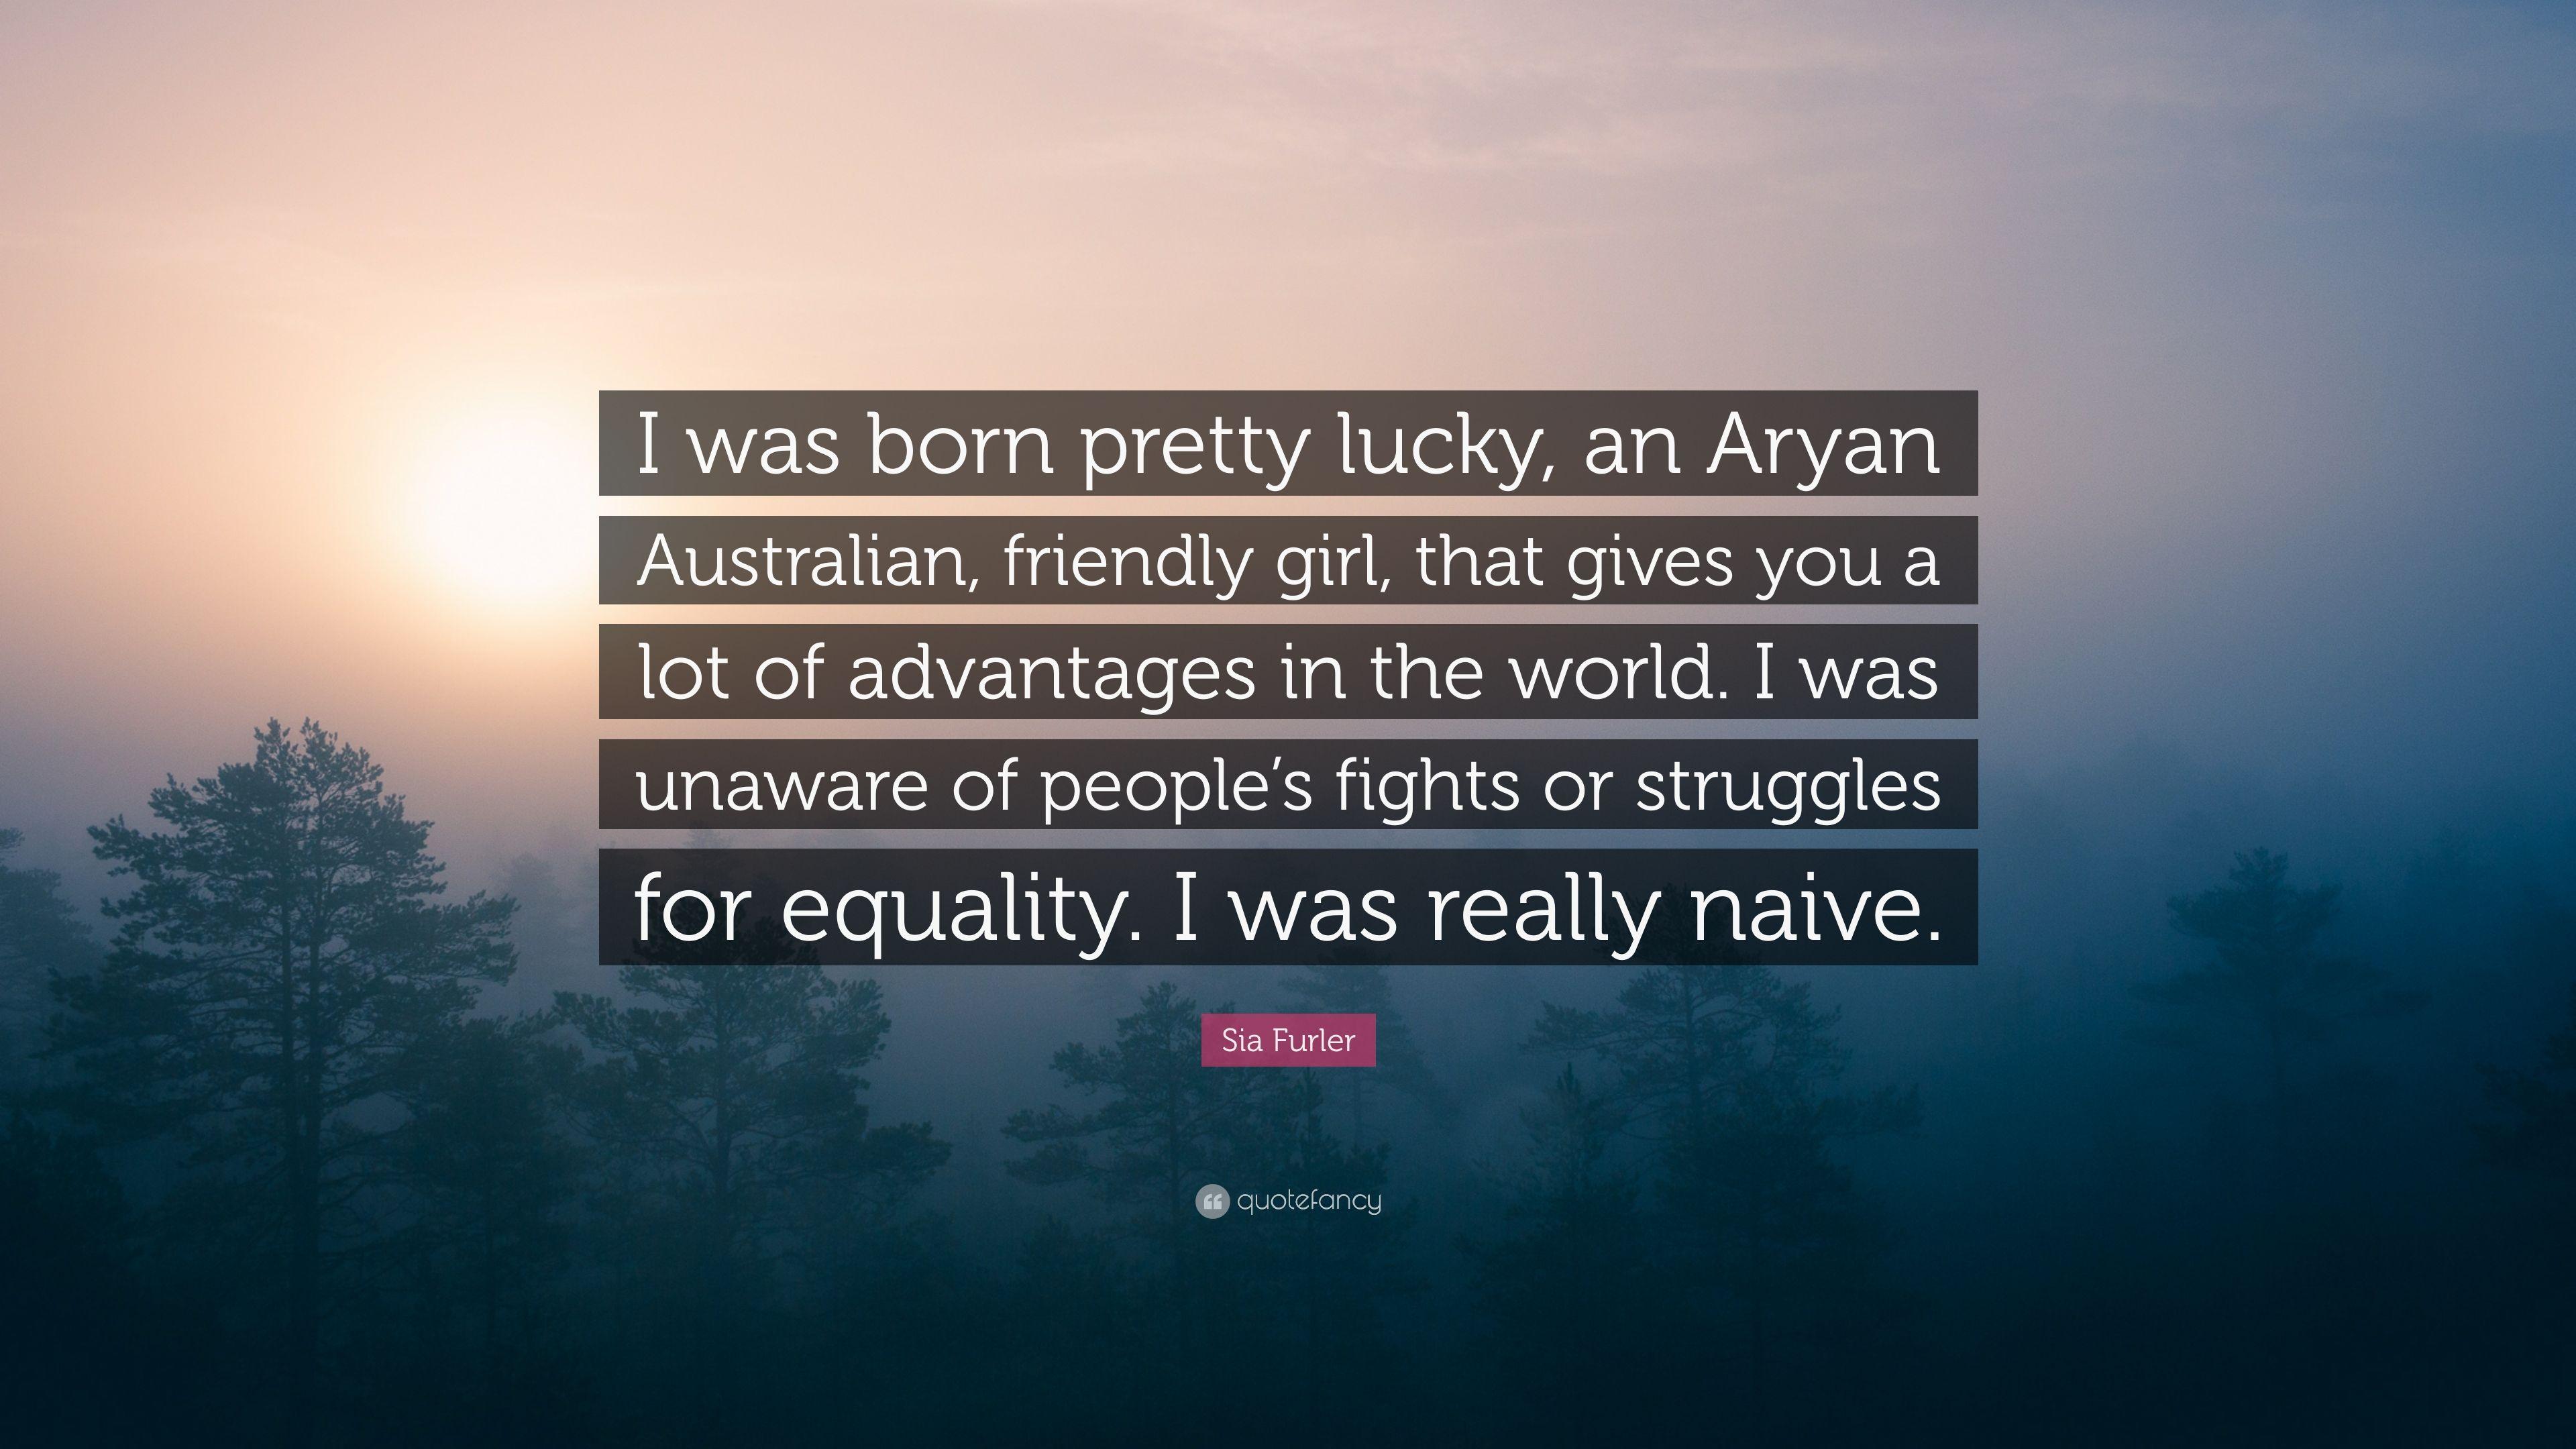 Sia Furler Quote: “I was born pretty lucky, an Aryan Australian